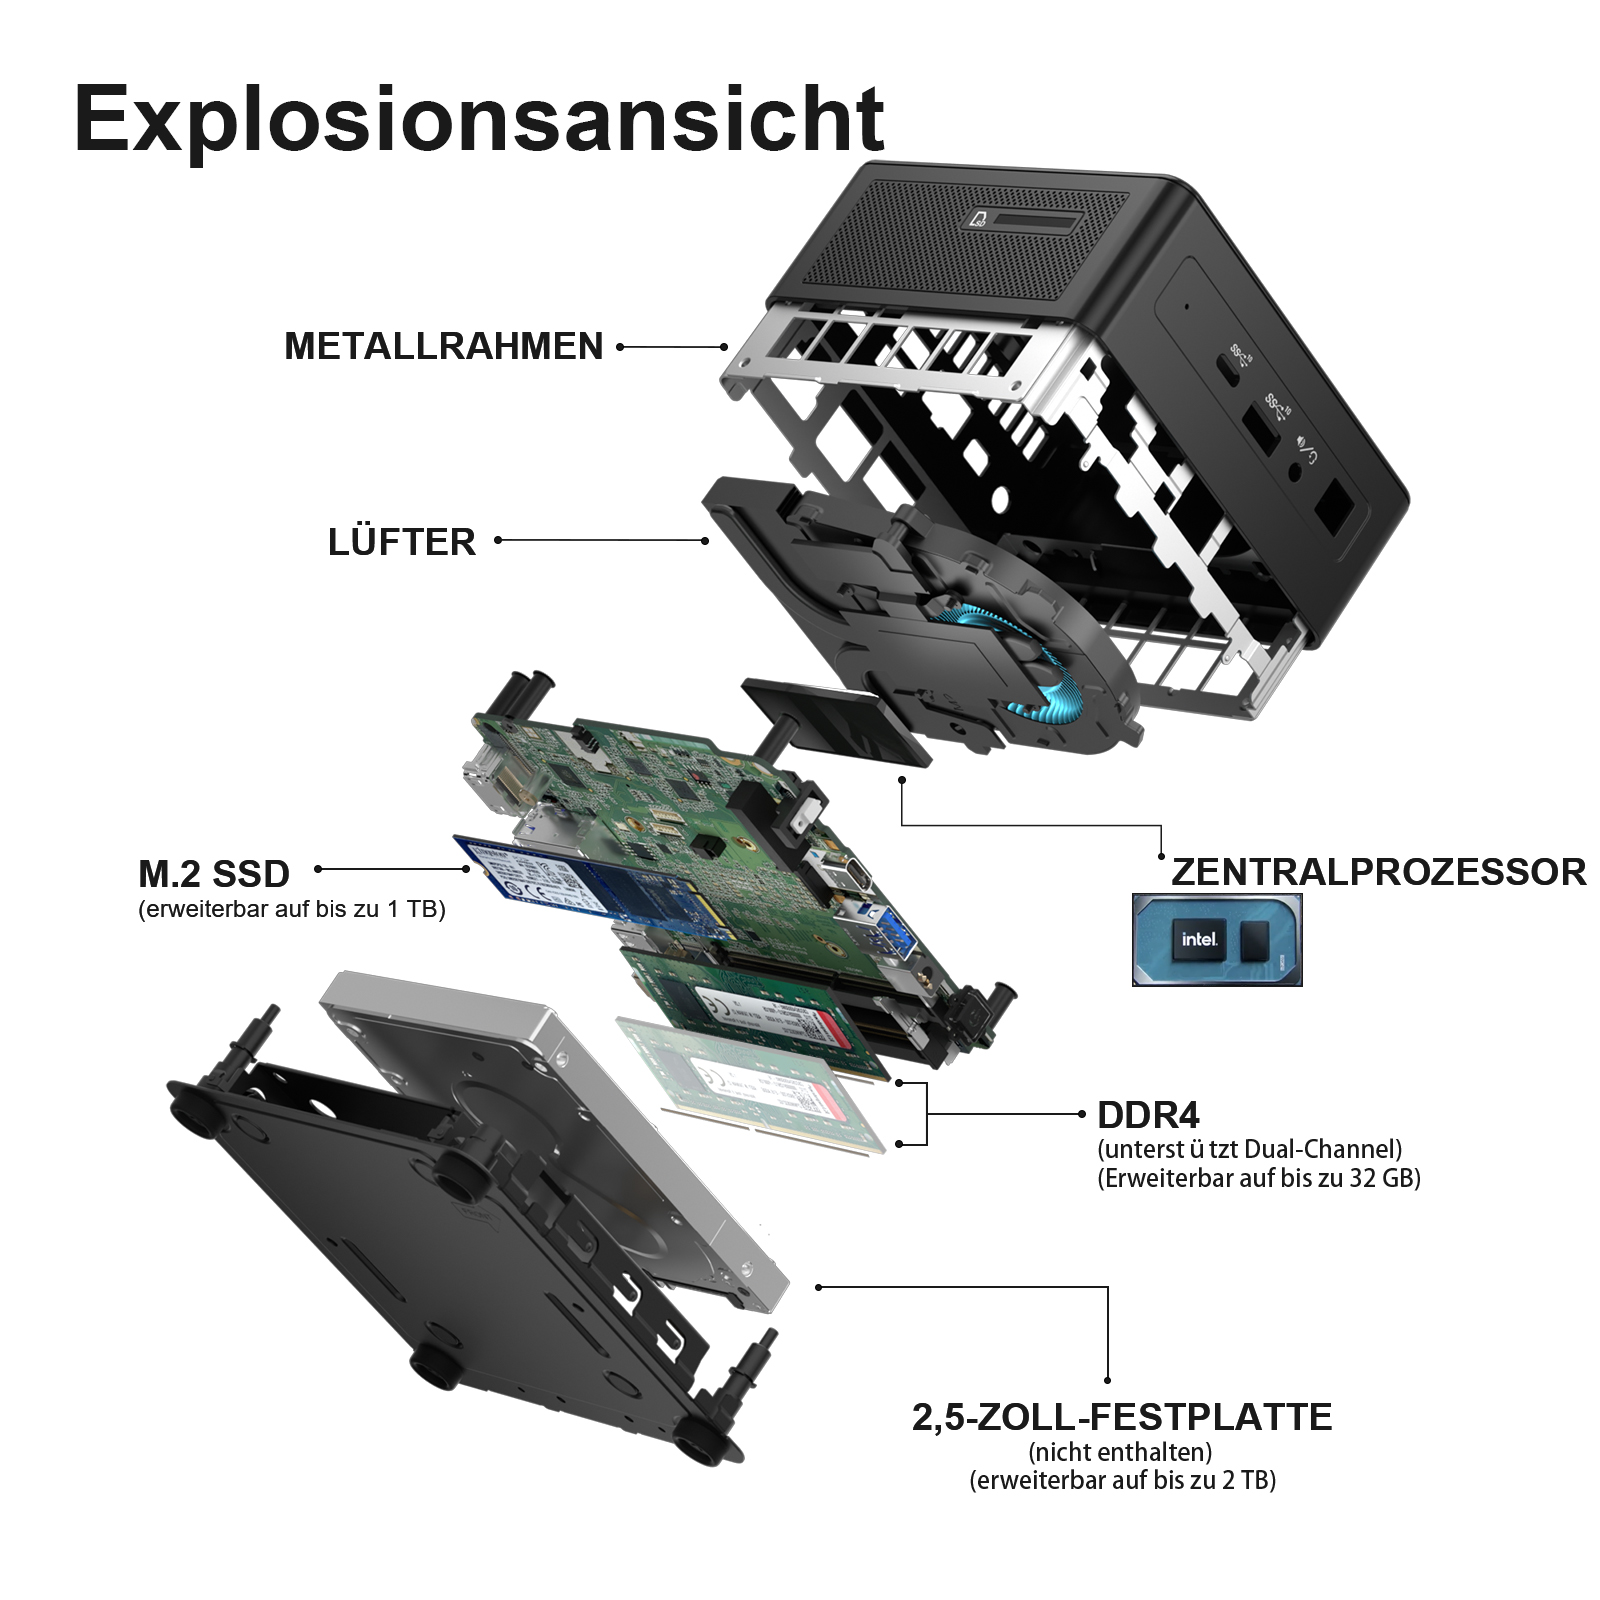 Mini IT8-Explosionsansicht